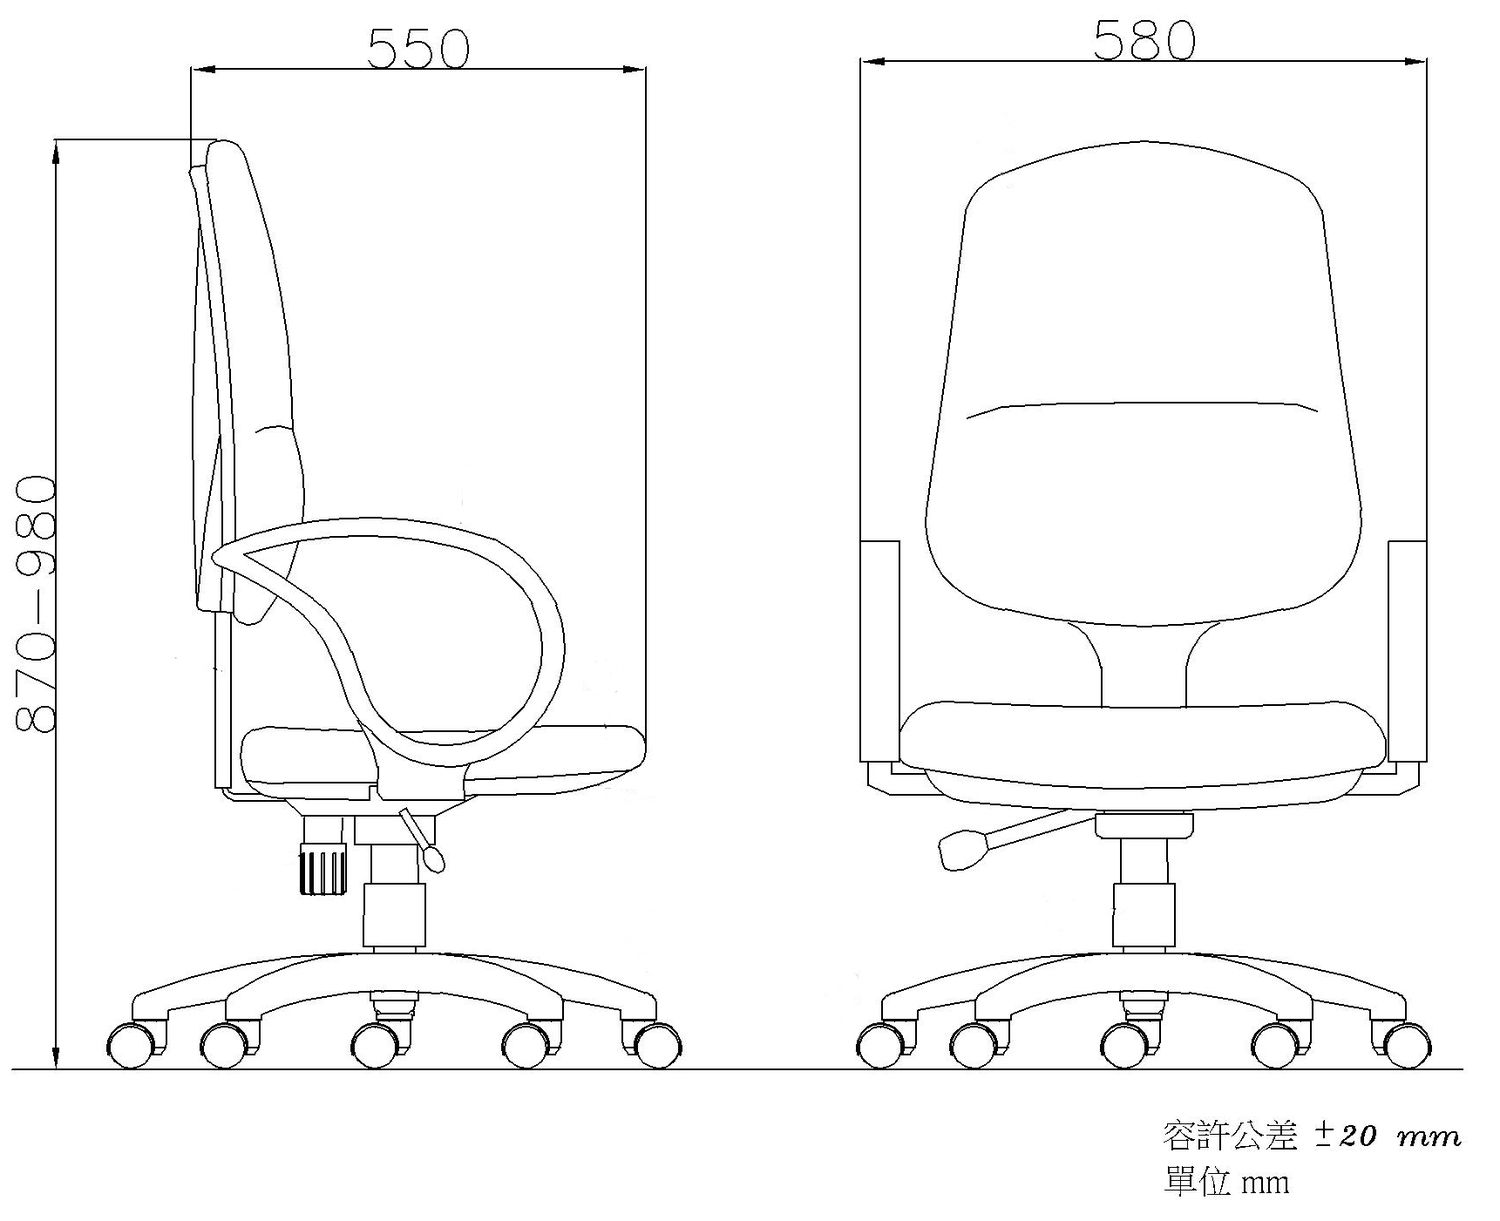 LM638AG Ergonomic Fabric Chair